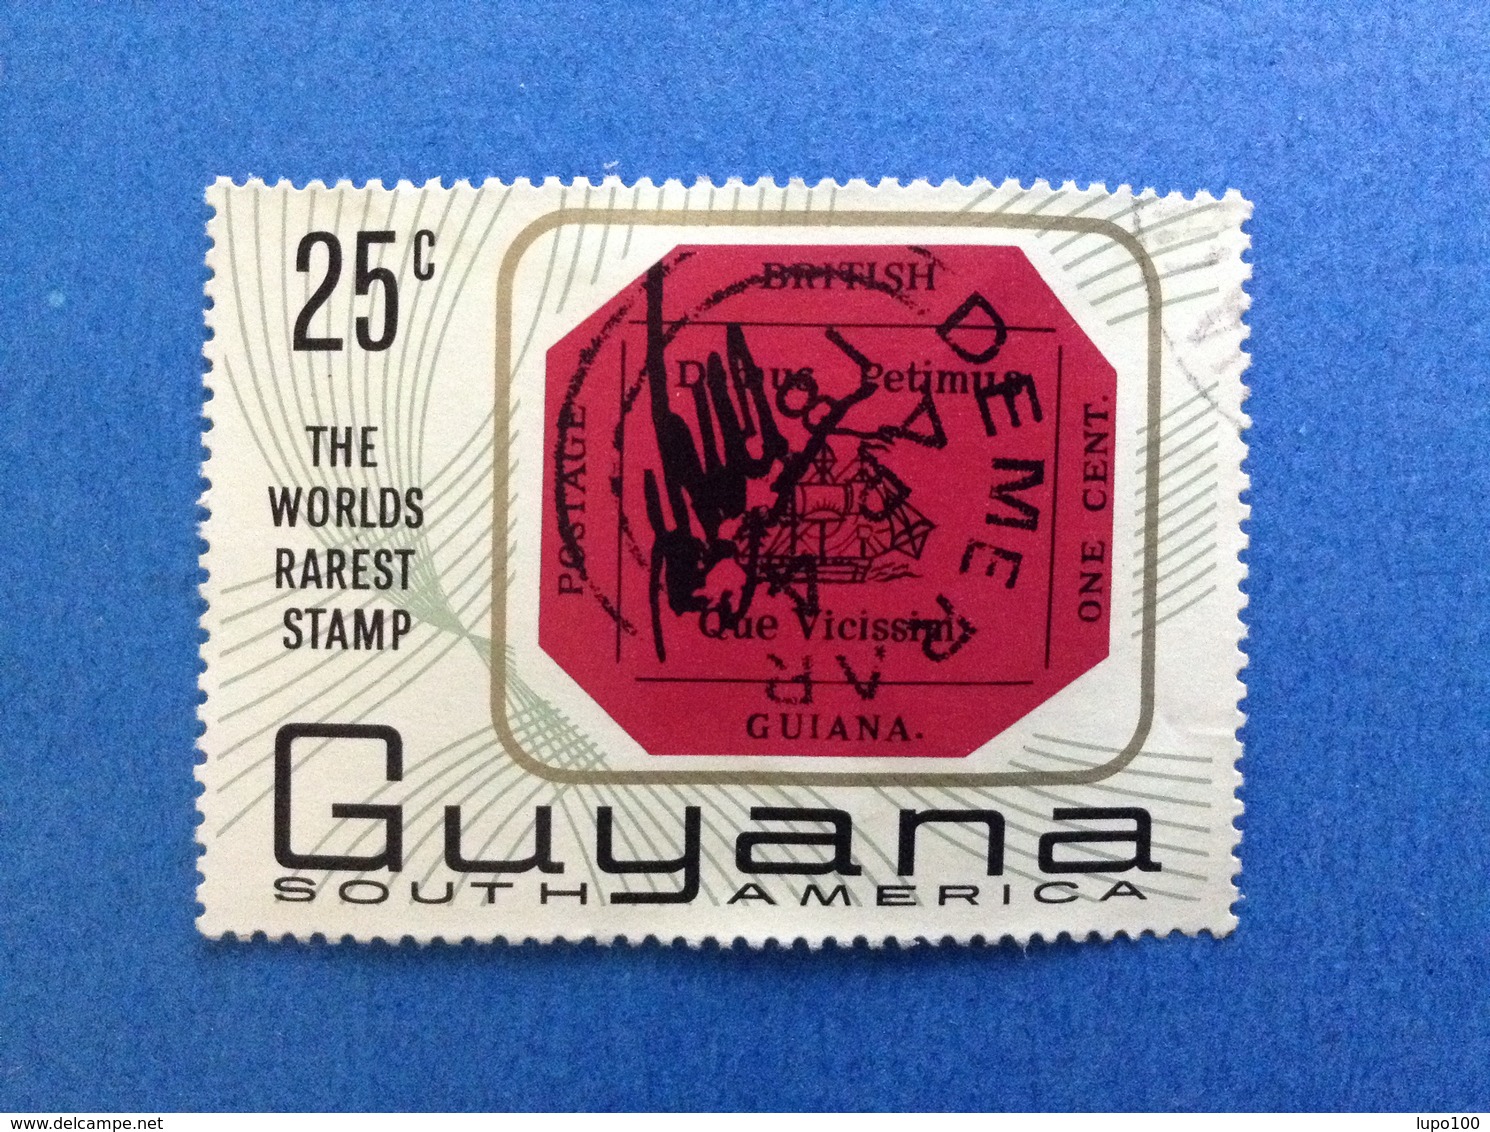 GUYANA GUIANA SOUTH AMERICA 25 C THE WORLDS RAREST STMP FRANCOBOLLO USATO STAMP USED - Guiana (1966-...)